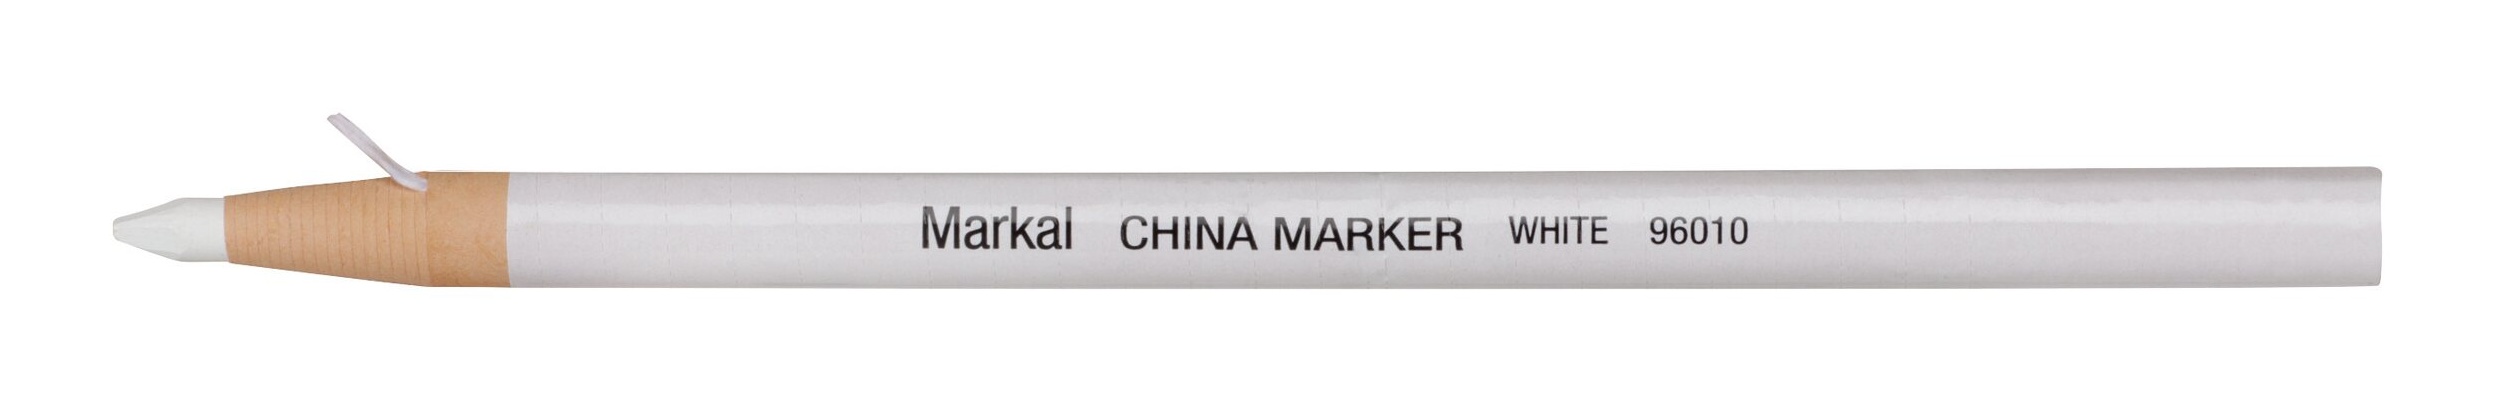 china marker